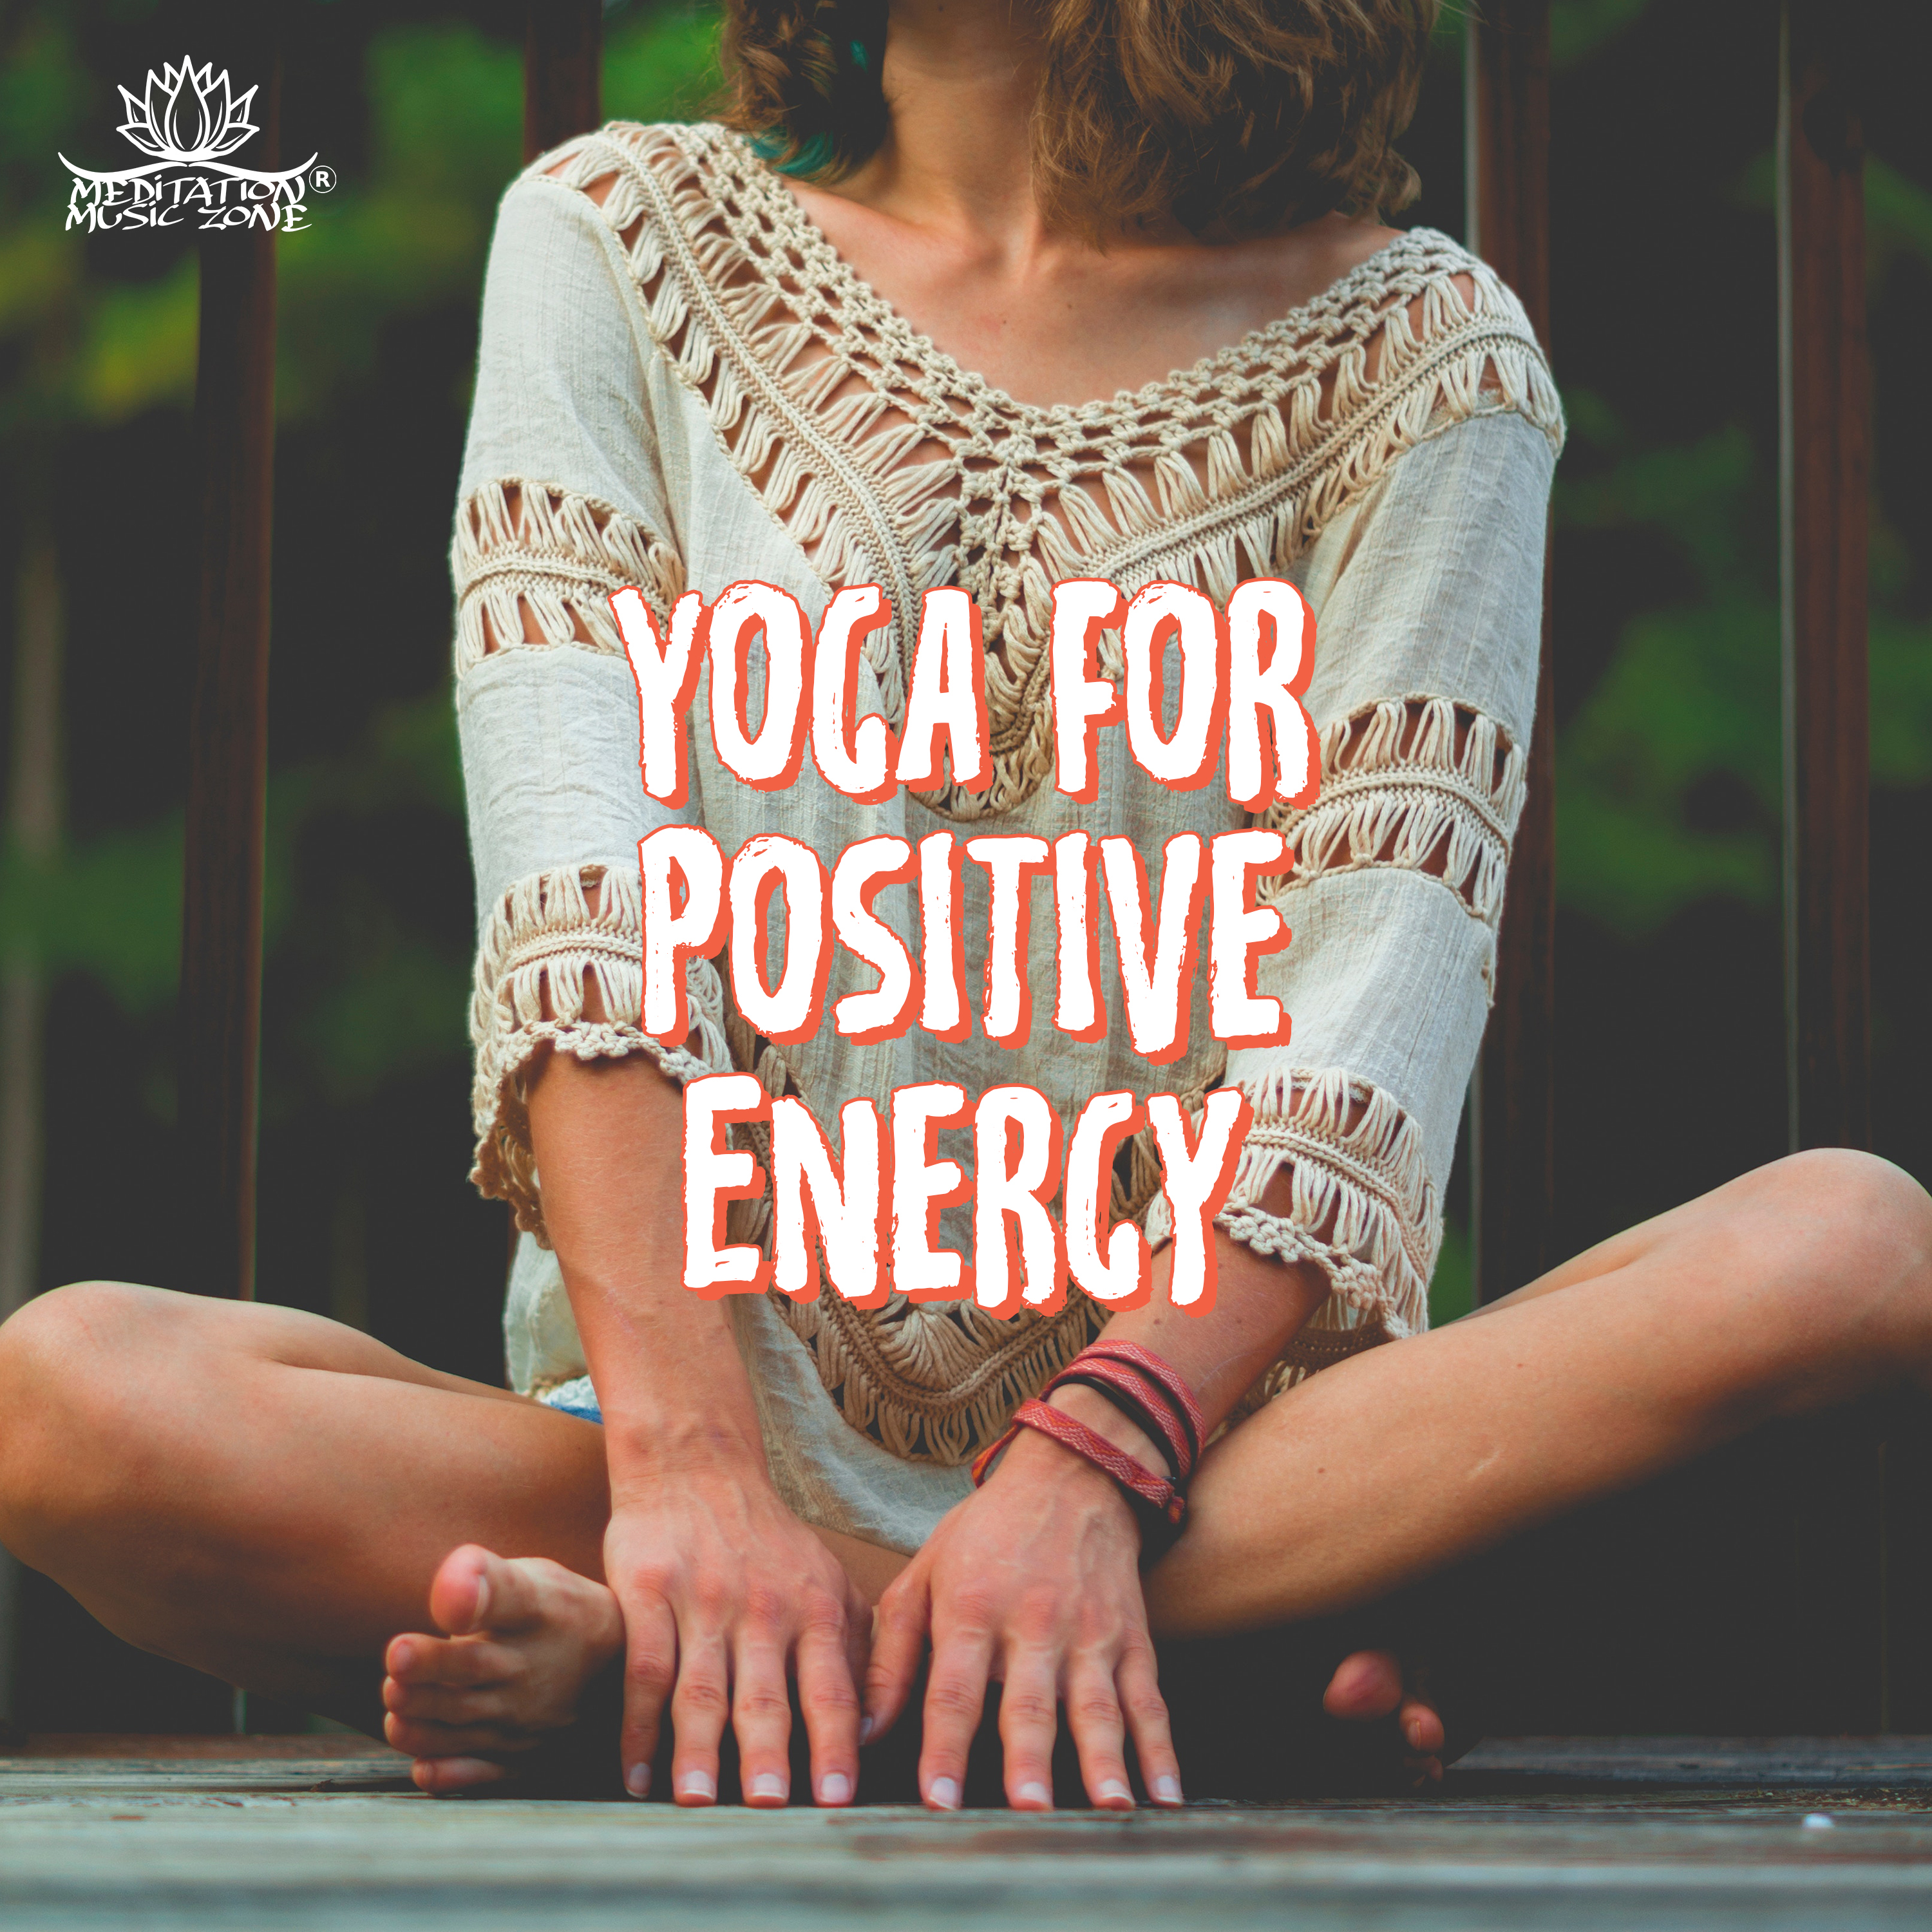 Yoga for Positive Energy